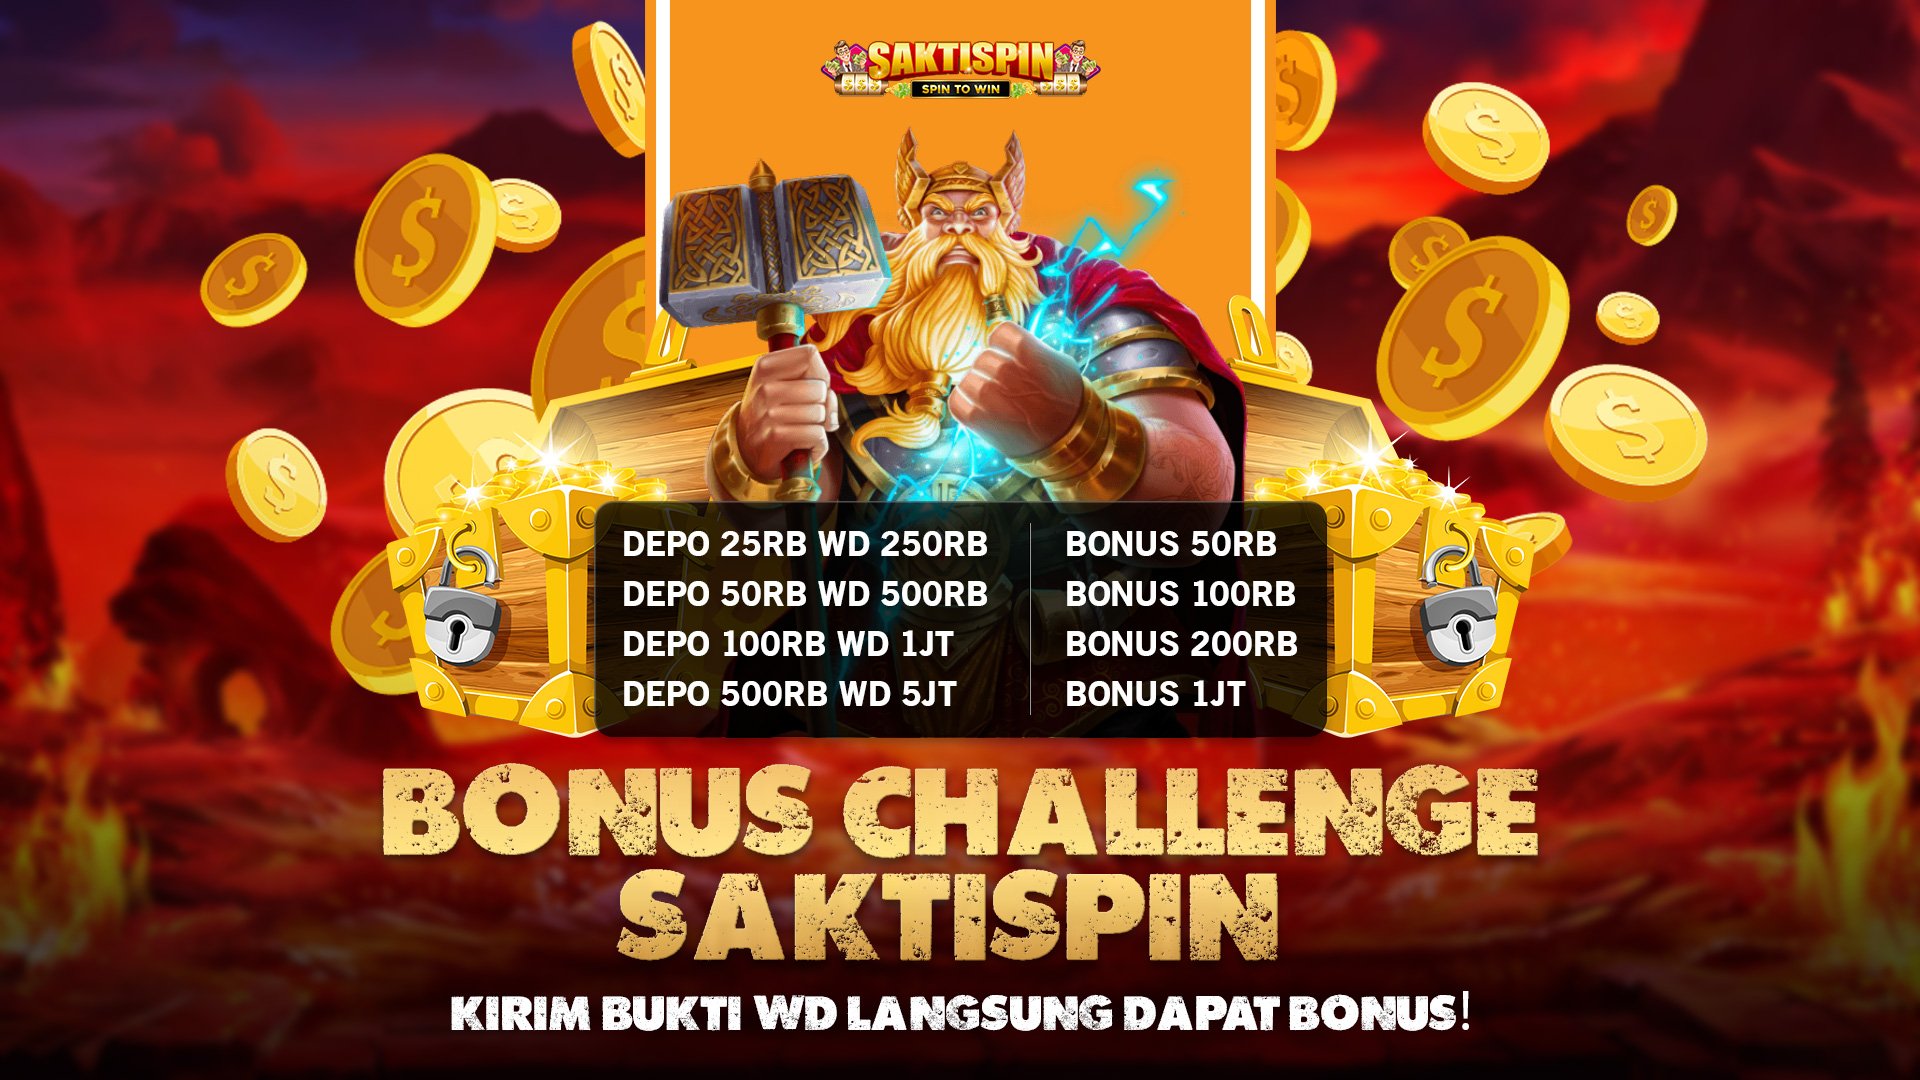 Banner Bonus Challenge WD Slot Saktispin